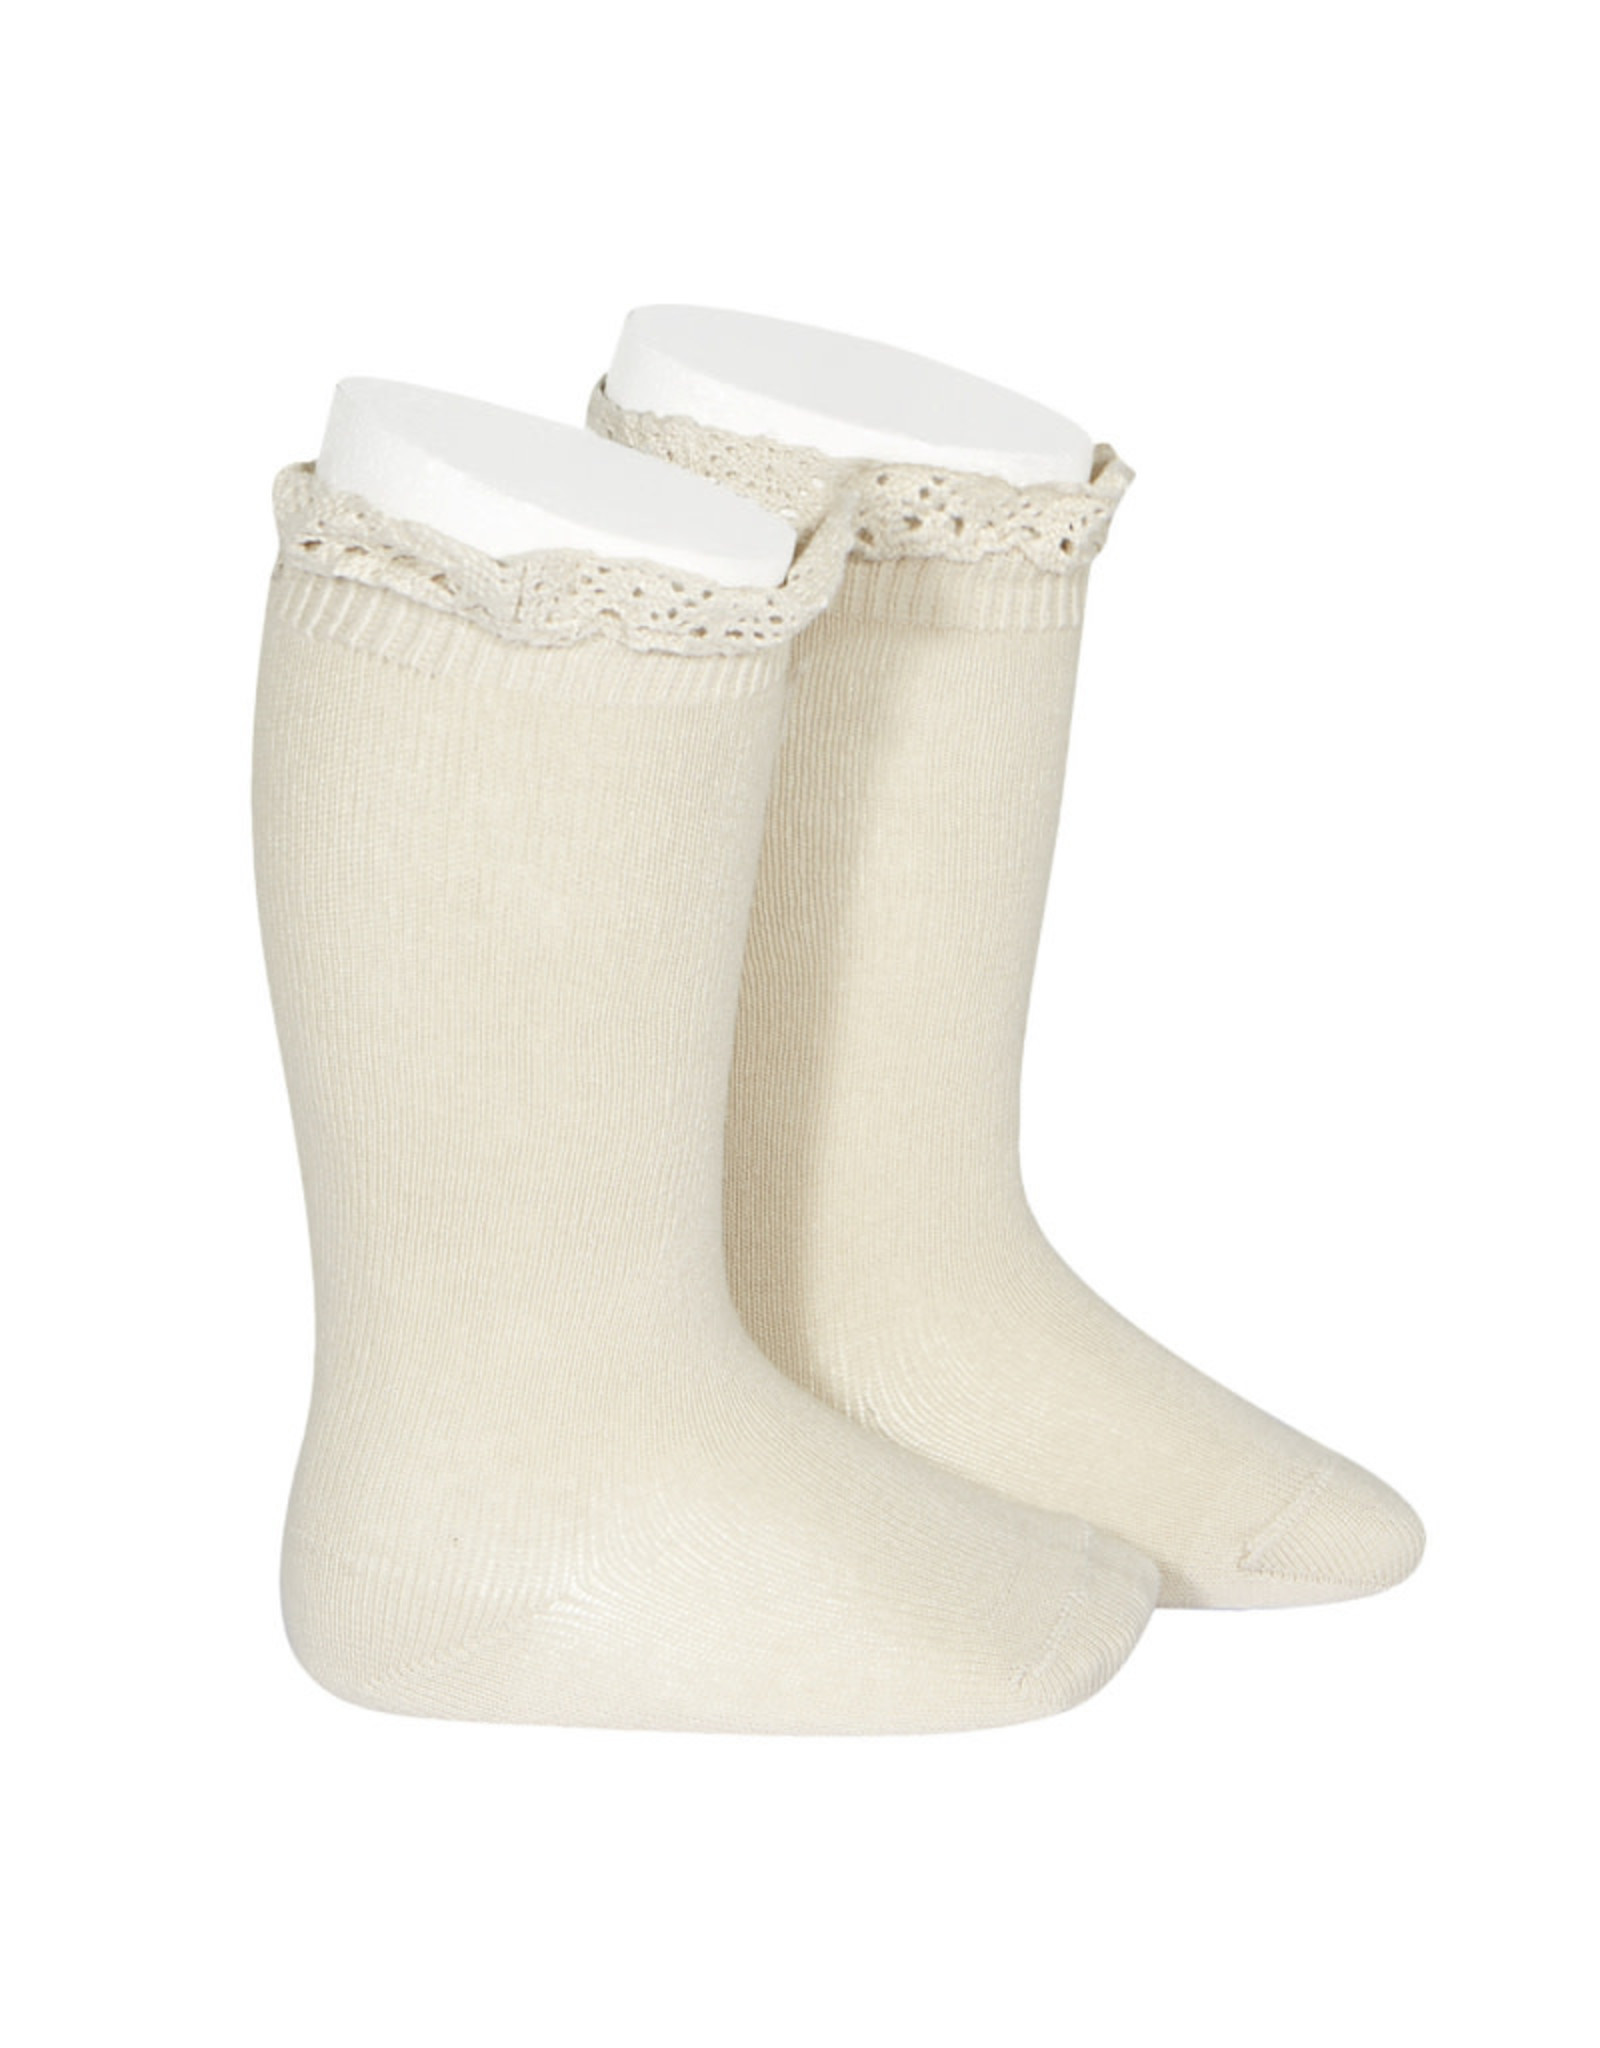 CONDOR Linen Lace Edging Knee Socks